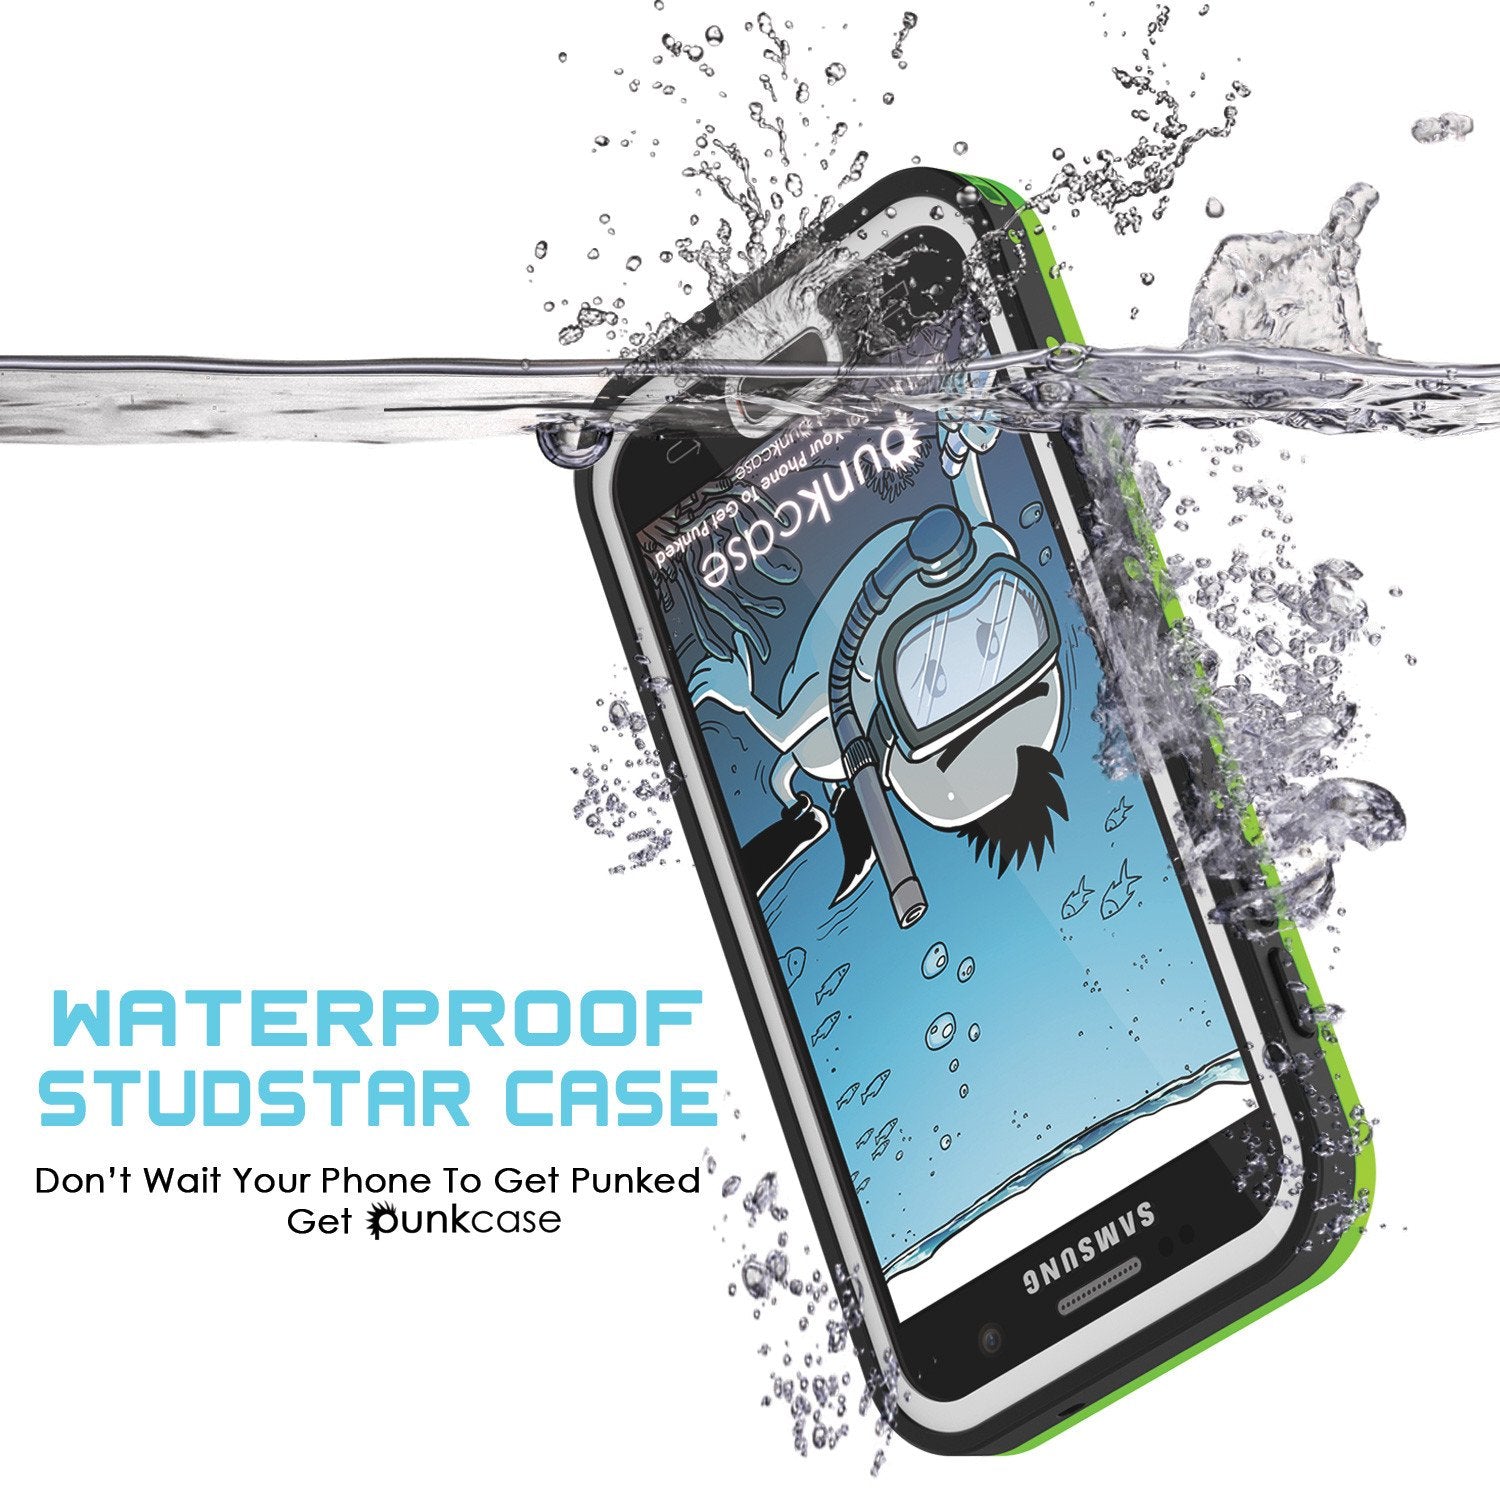 Galaxy S7 Waterproof Case PunkCase StudStar Light Green Thin 6.6ft Underwater IP68 Shock/DirtProof